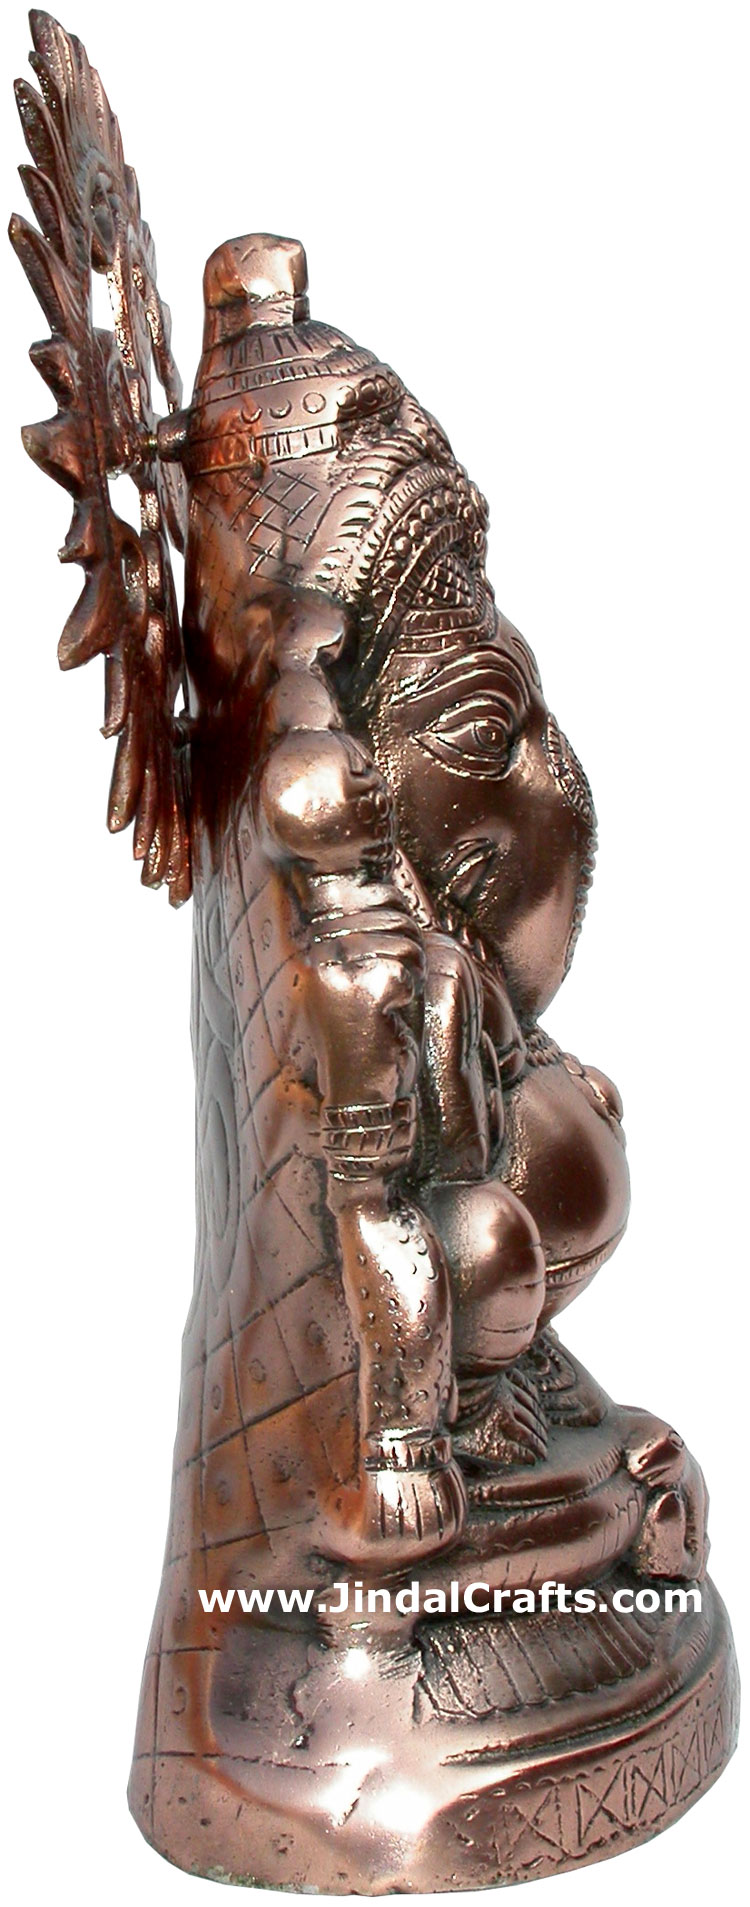 Lord Ganesha Statue Sculptures Figurines India Craft